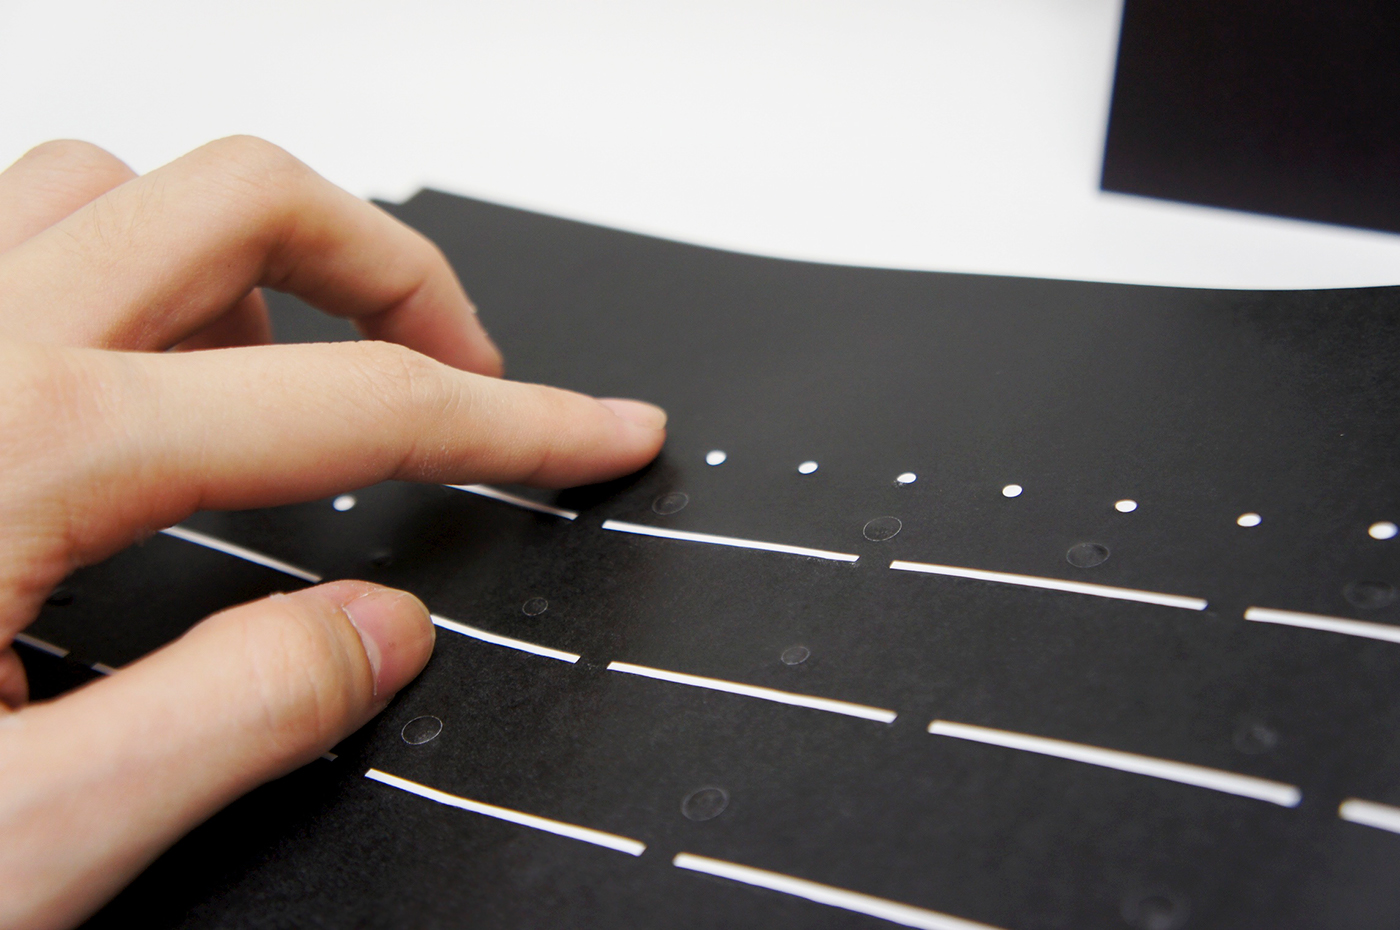 handbound book book poster Braille dots touch feel listen SENSORY sensory experience craft